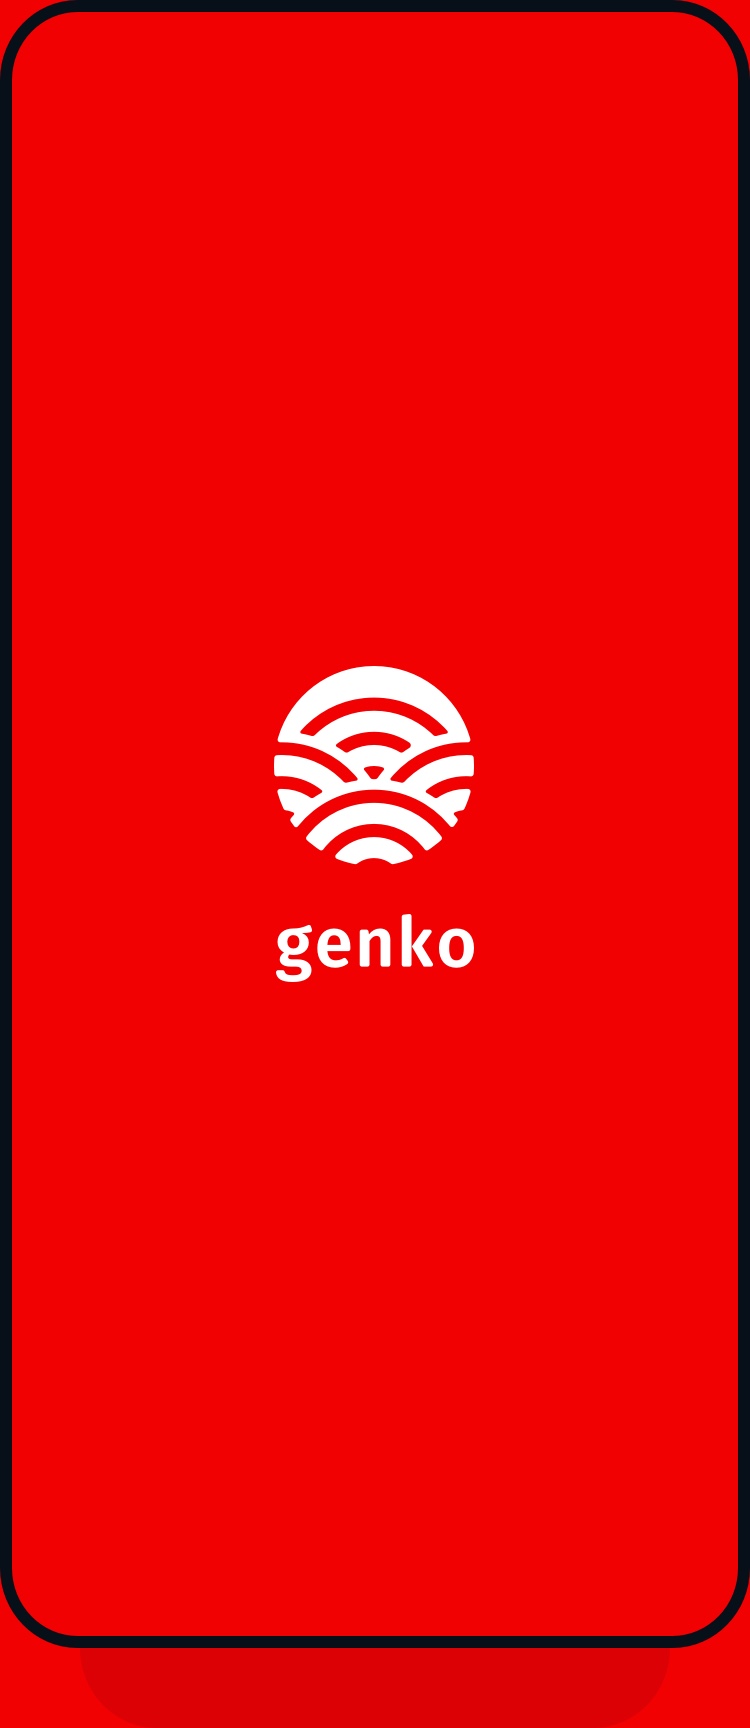 Genko login screen